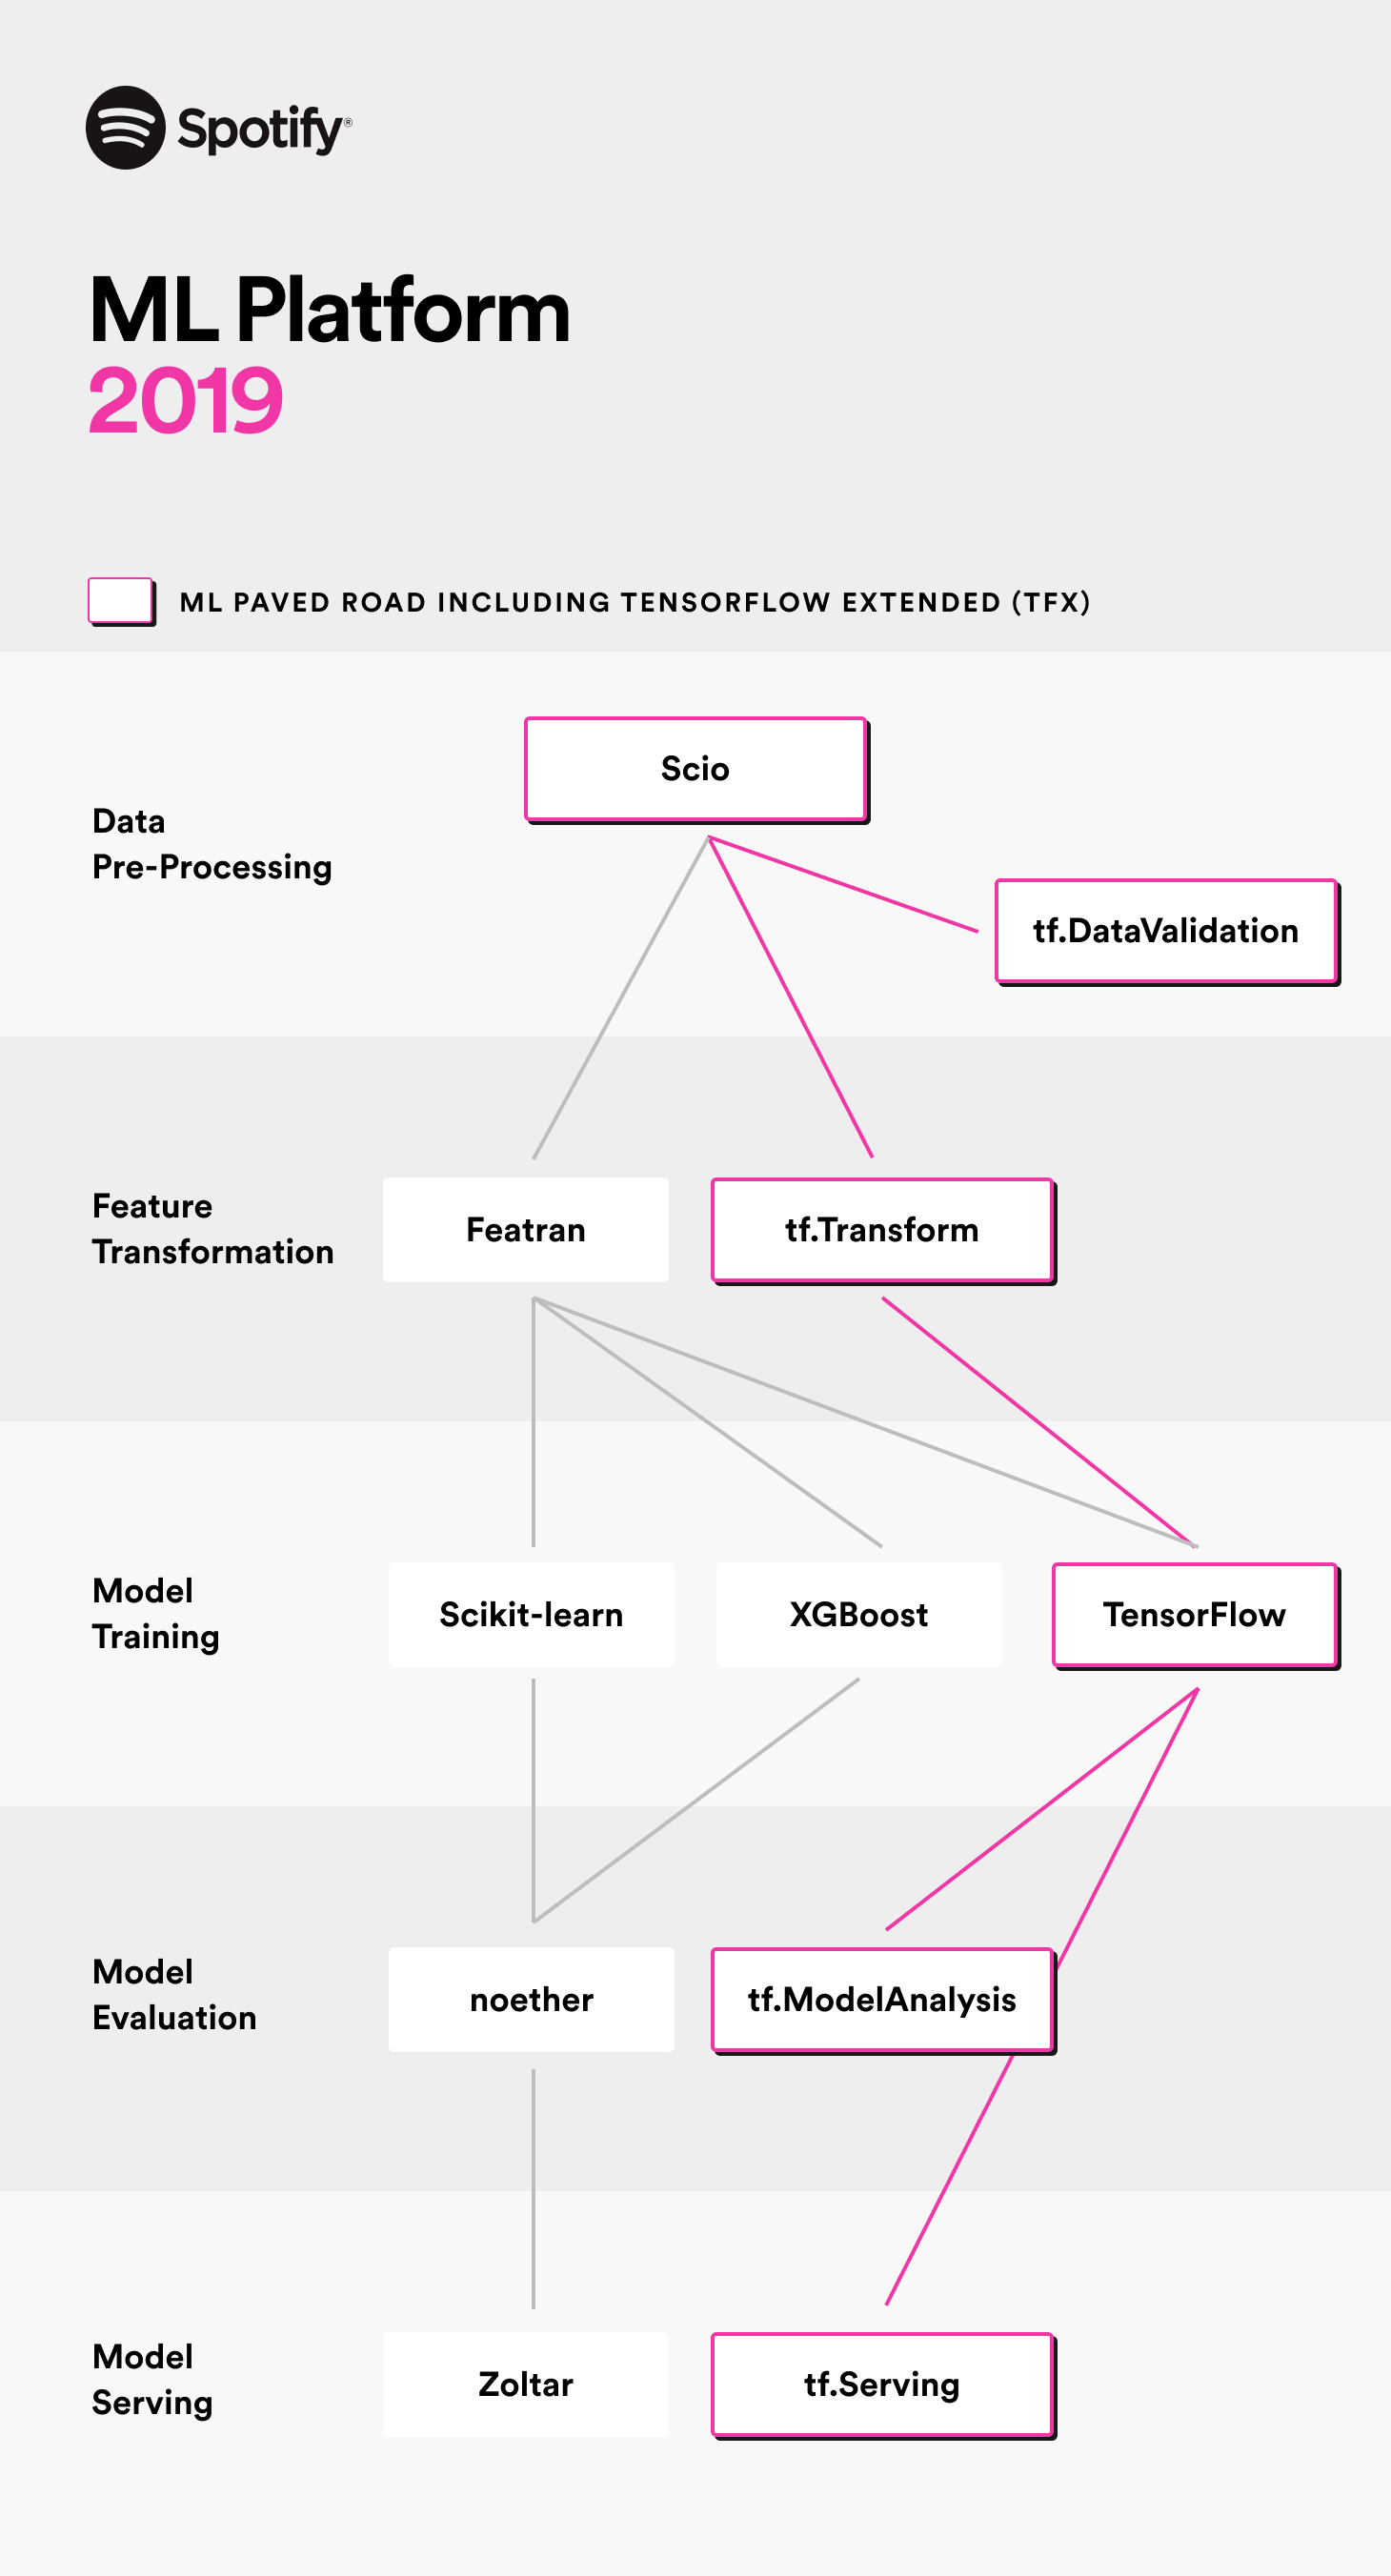 Visualization of the second version of Spotify's ML Platform